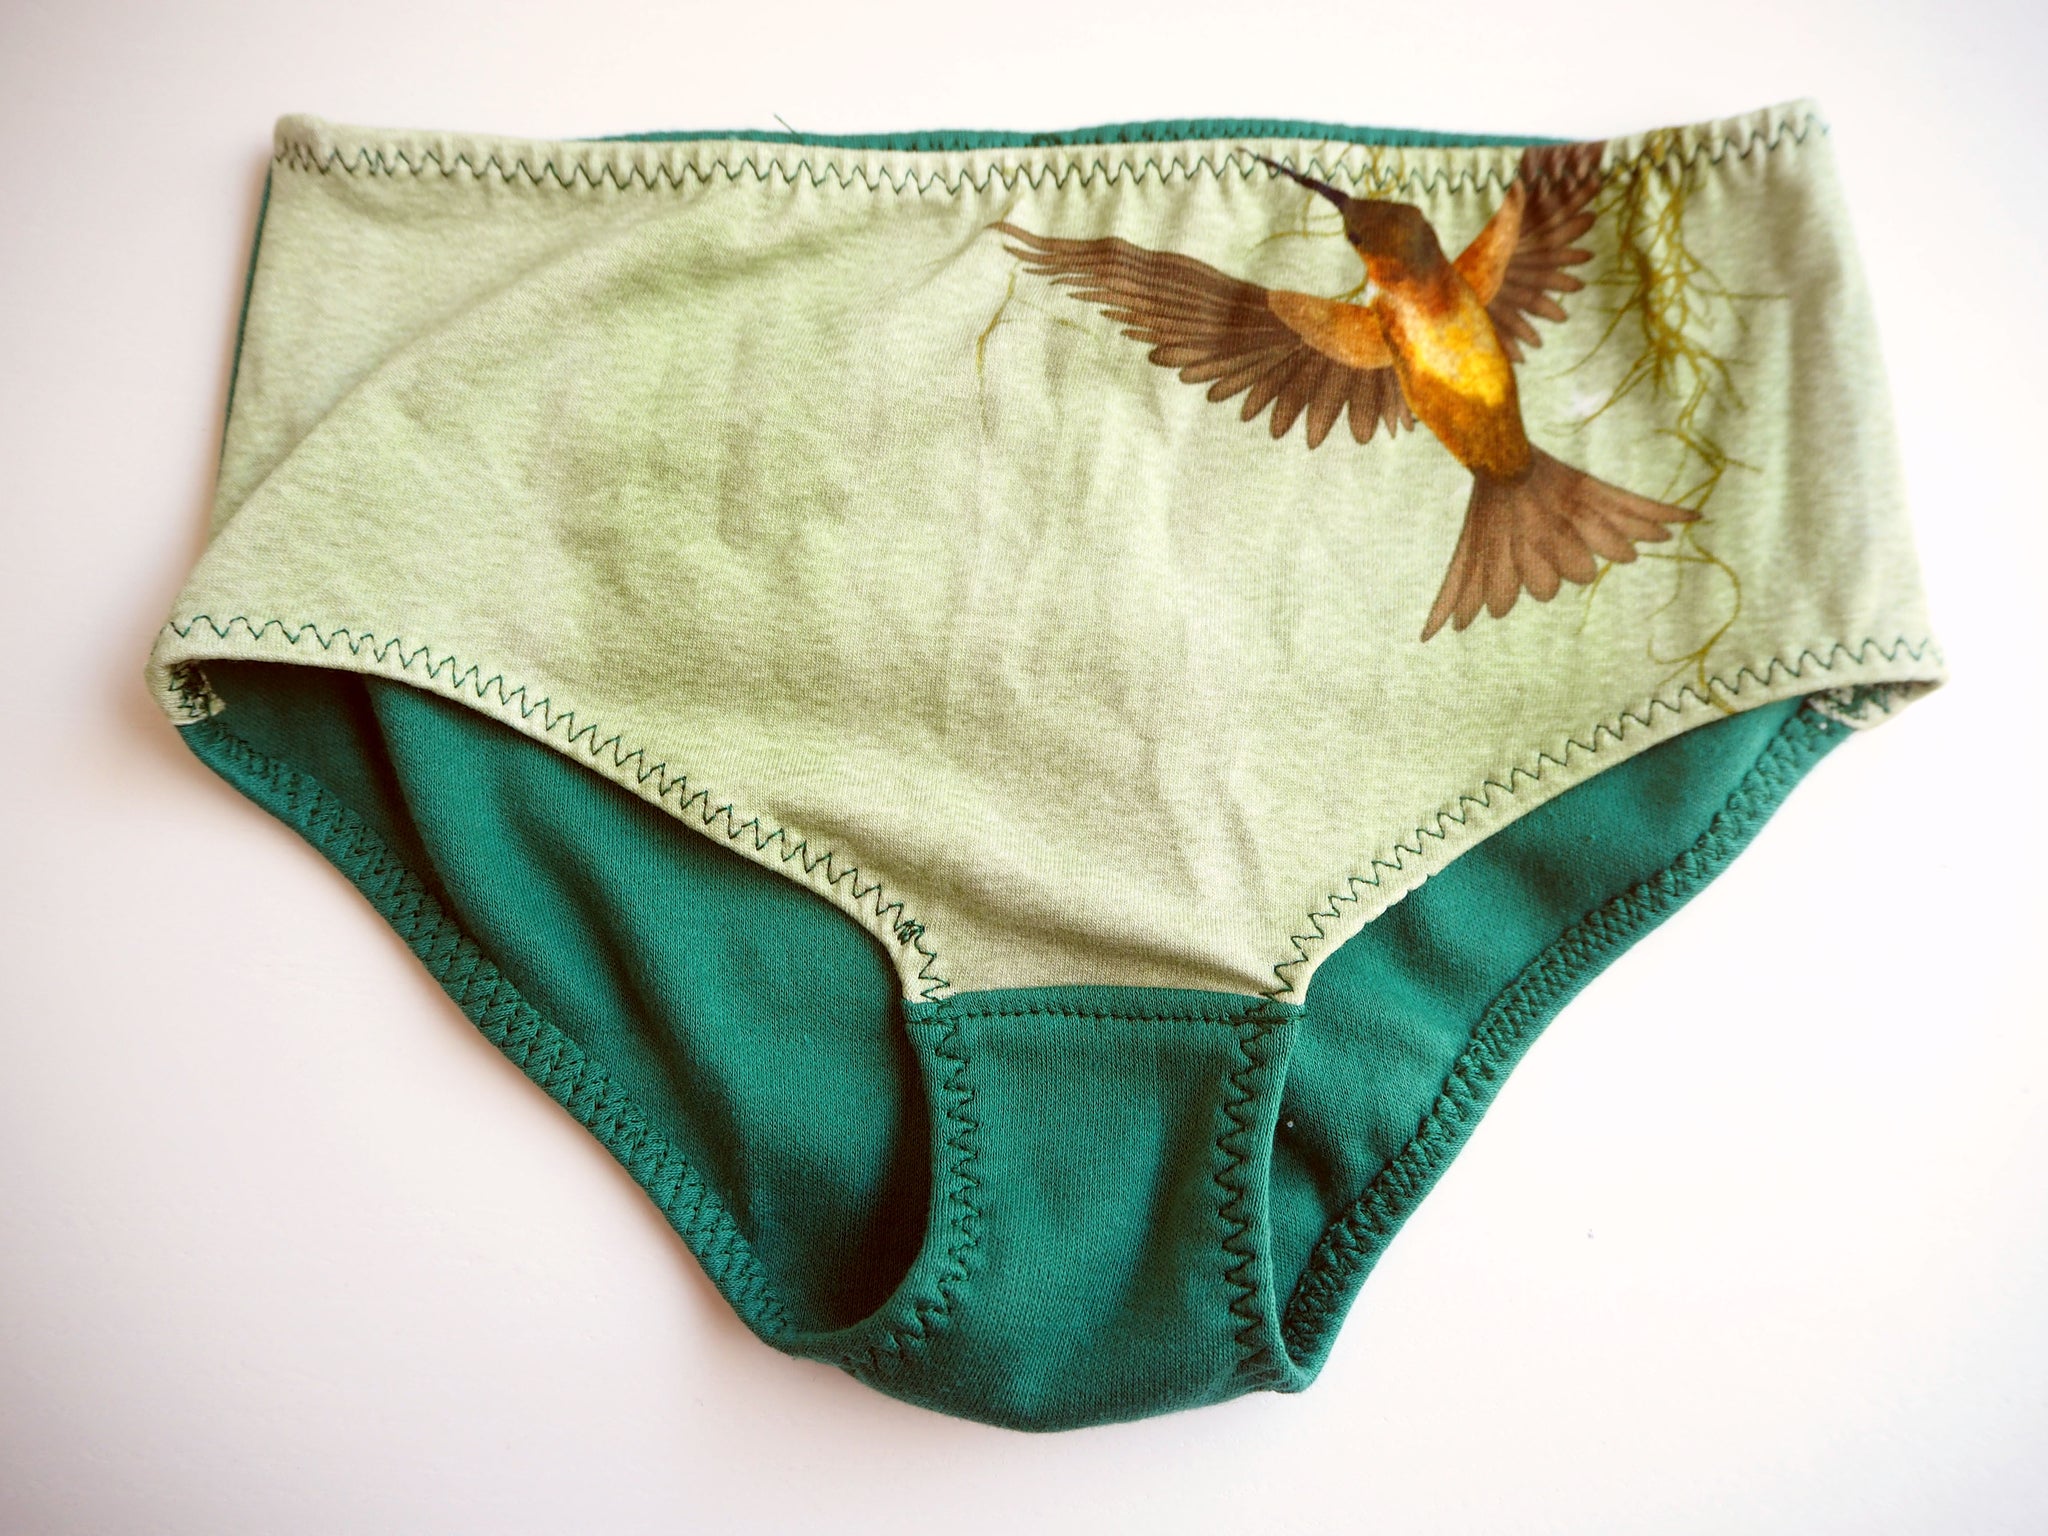 Seagull Adult Pants Women's Knickers Organic Cotton Underwear 